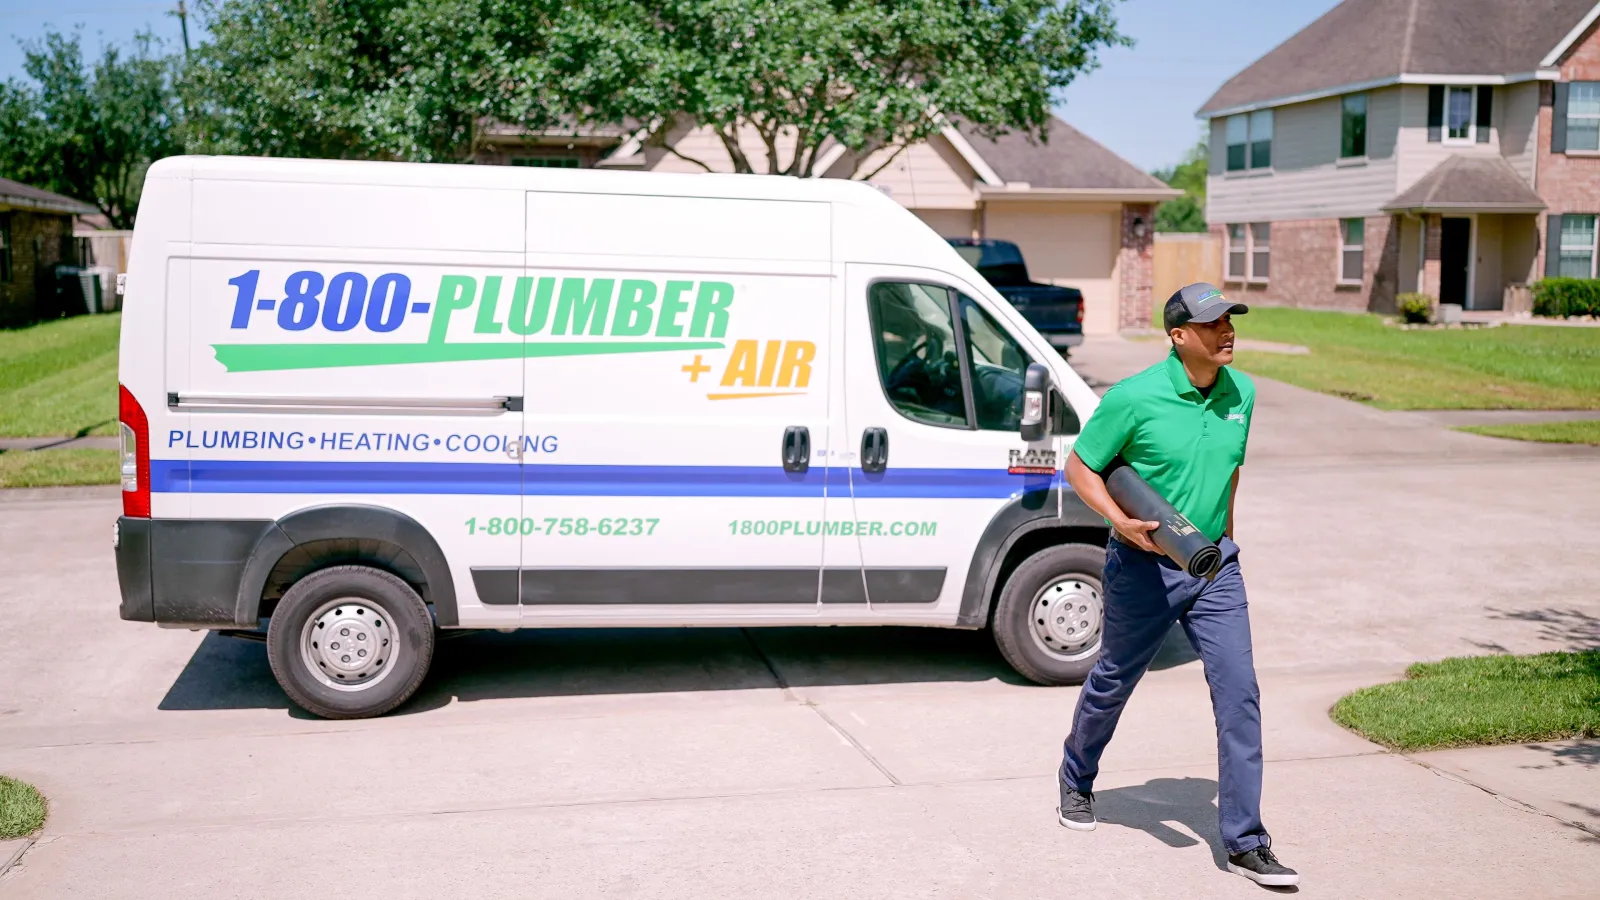 A Scottsdale plumber and a 1-800-Plumber +Air van